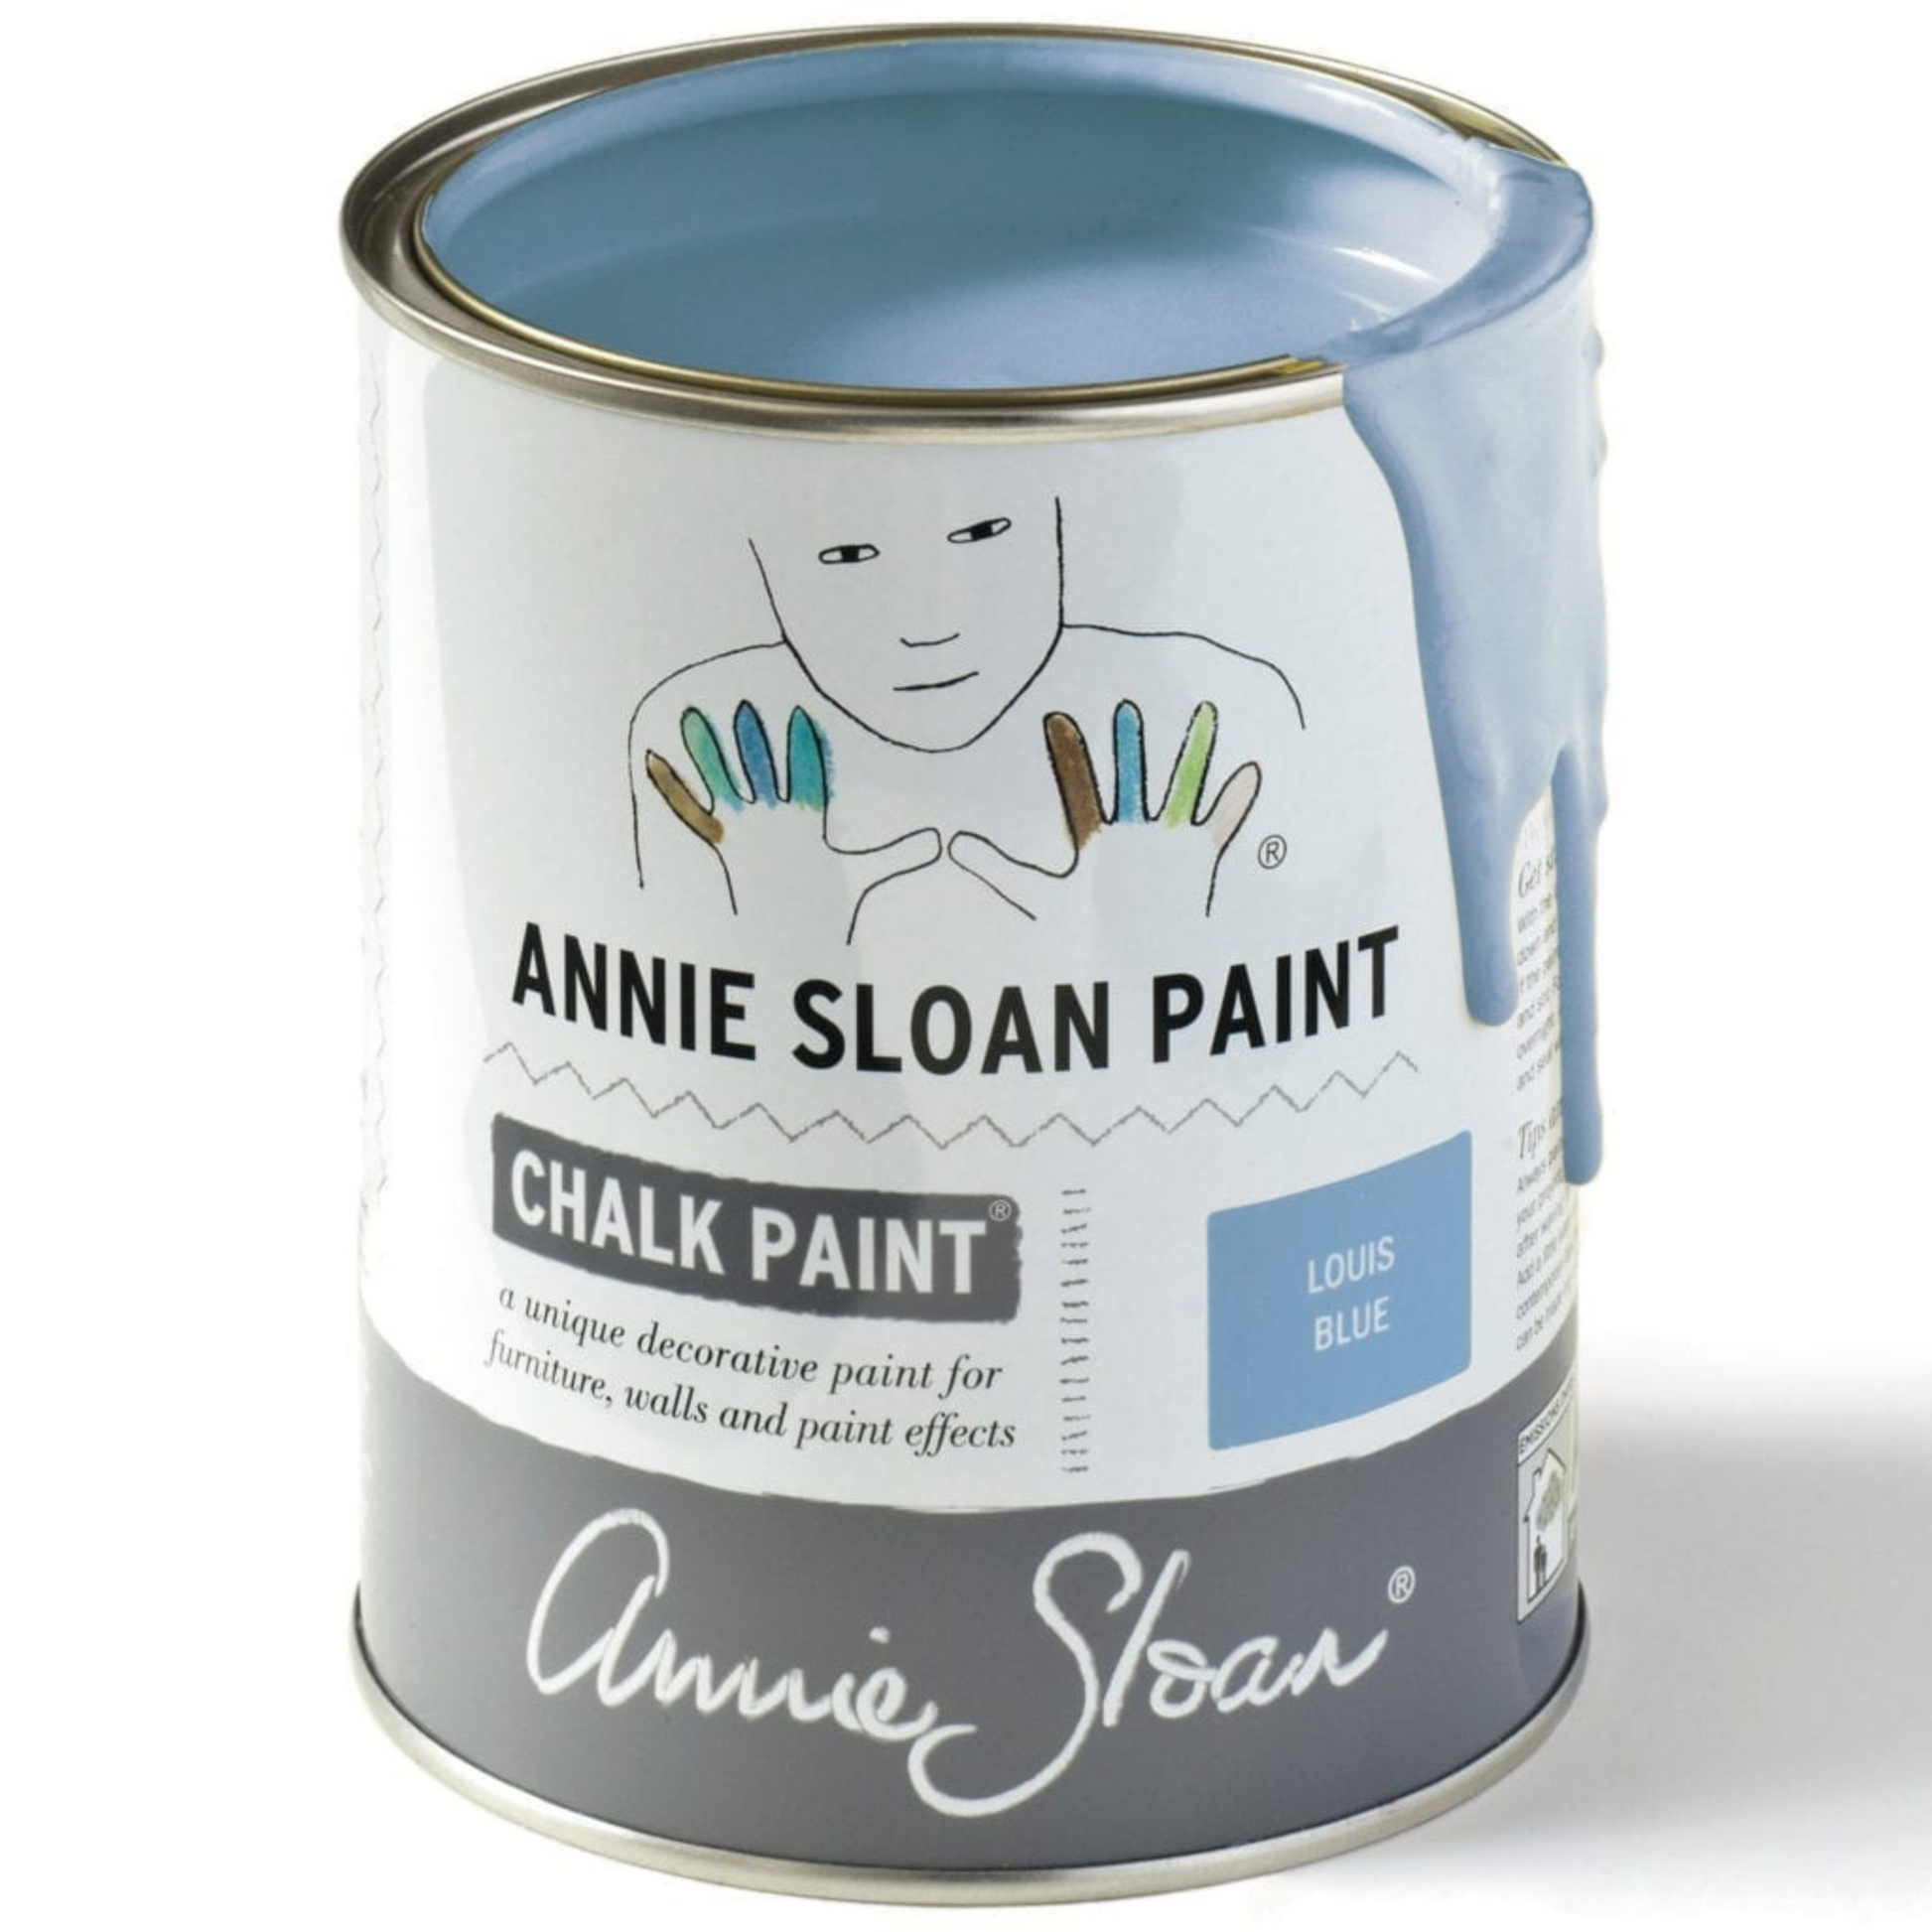 Can of Louis Blue Annie Sloan Chalk Paint.